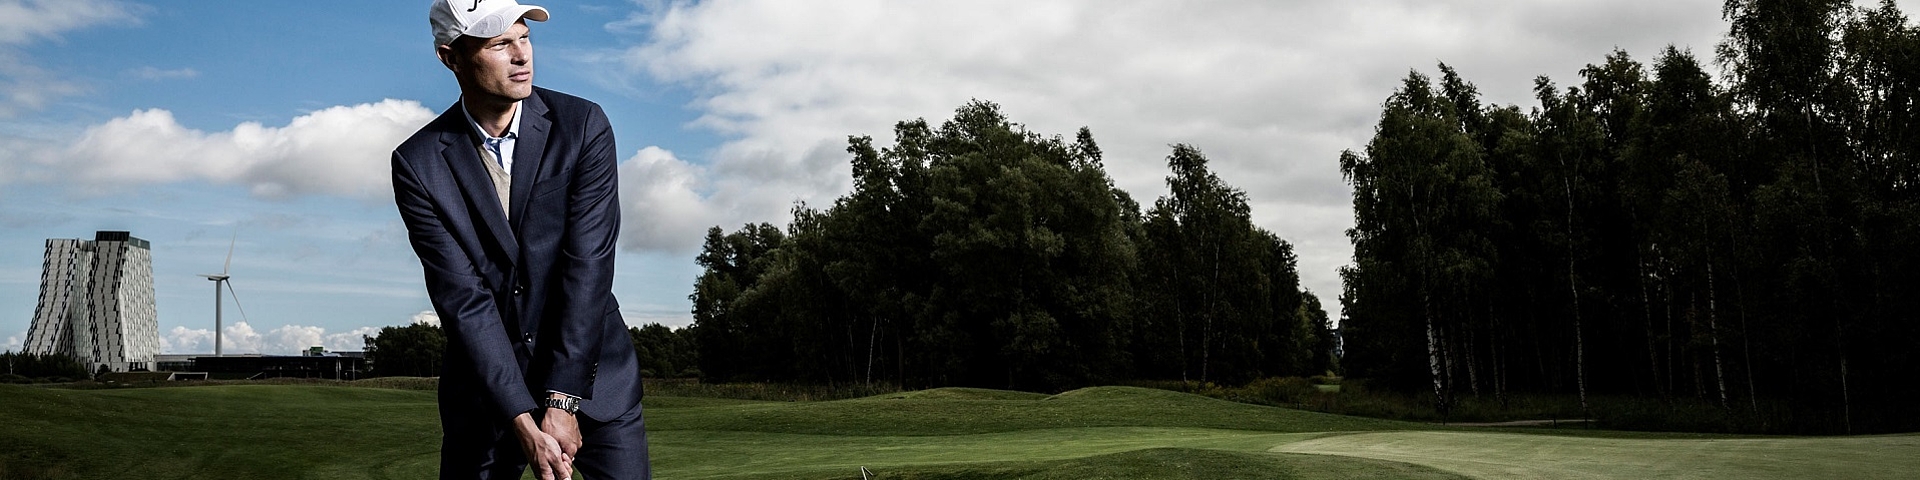 Royal Golf Club | Golf i København